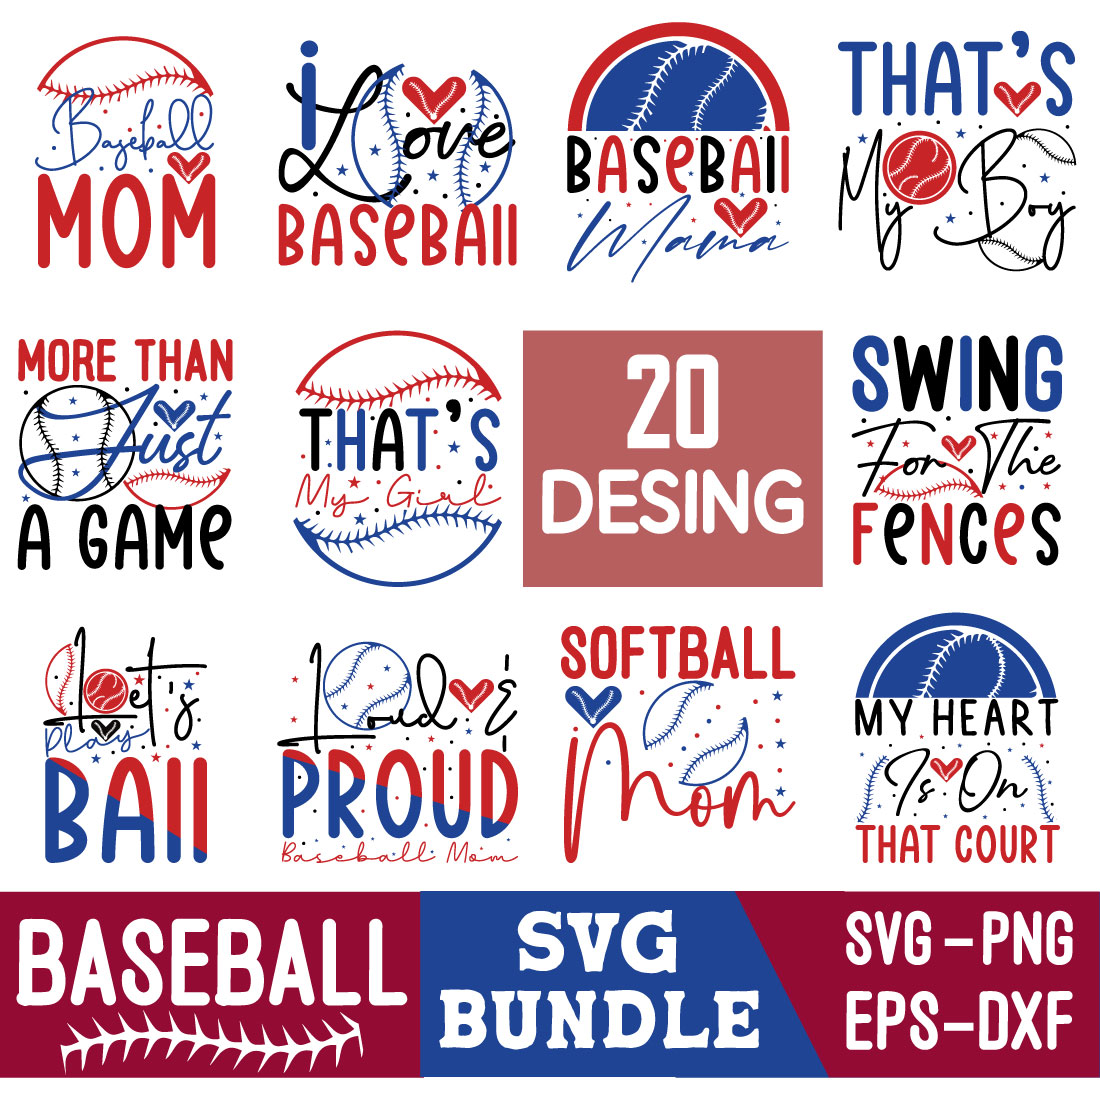 Baseball Svg Bundle preview image.